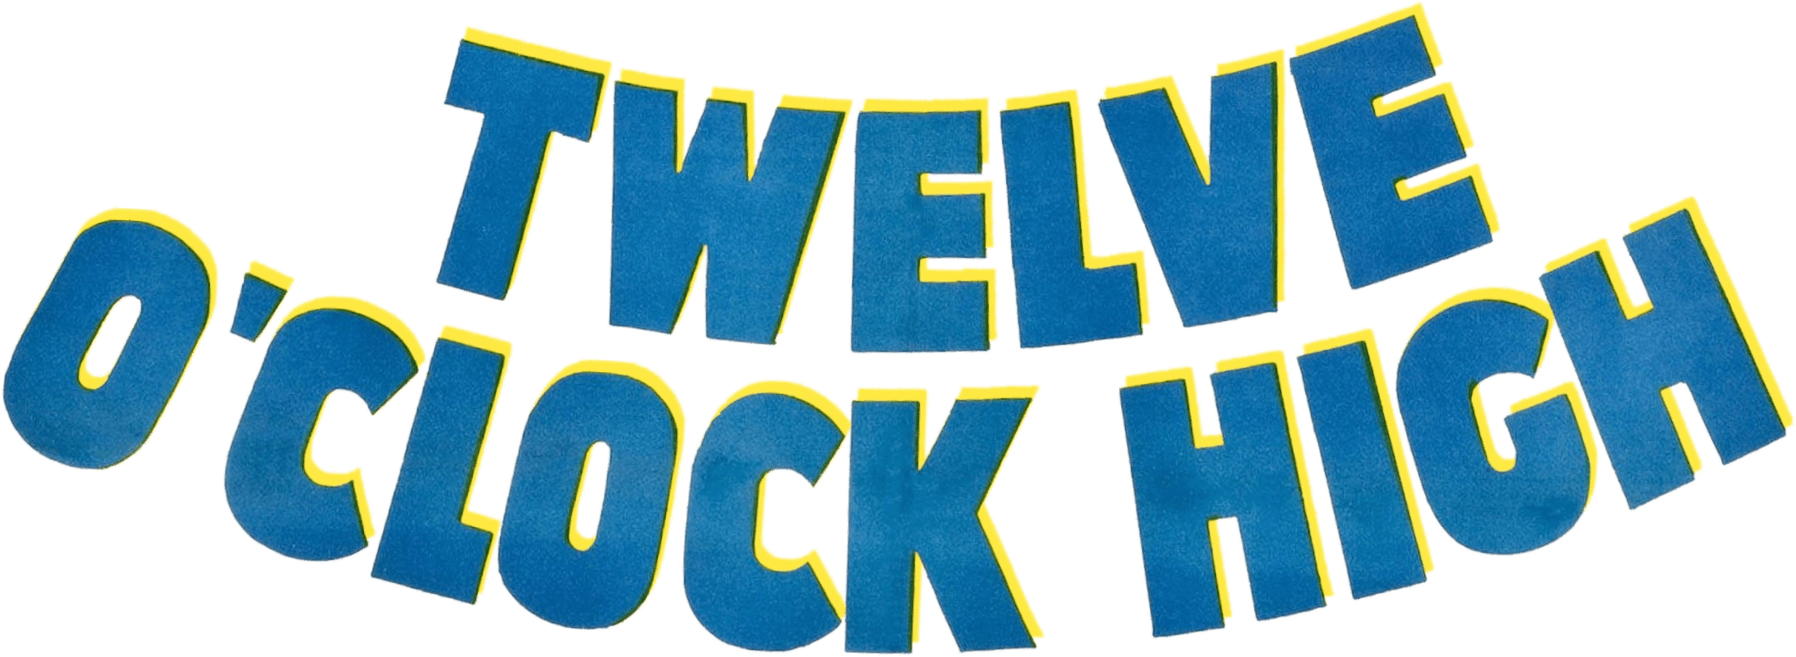 Twelve O'Clock High logo